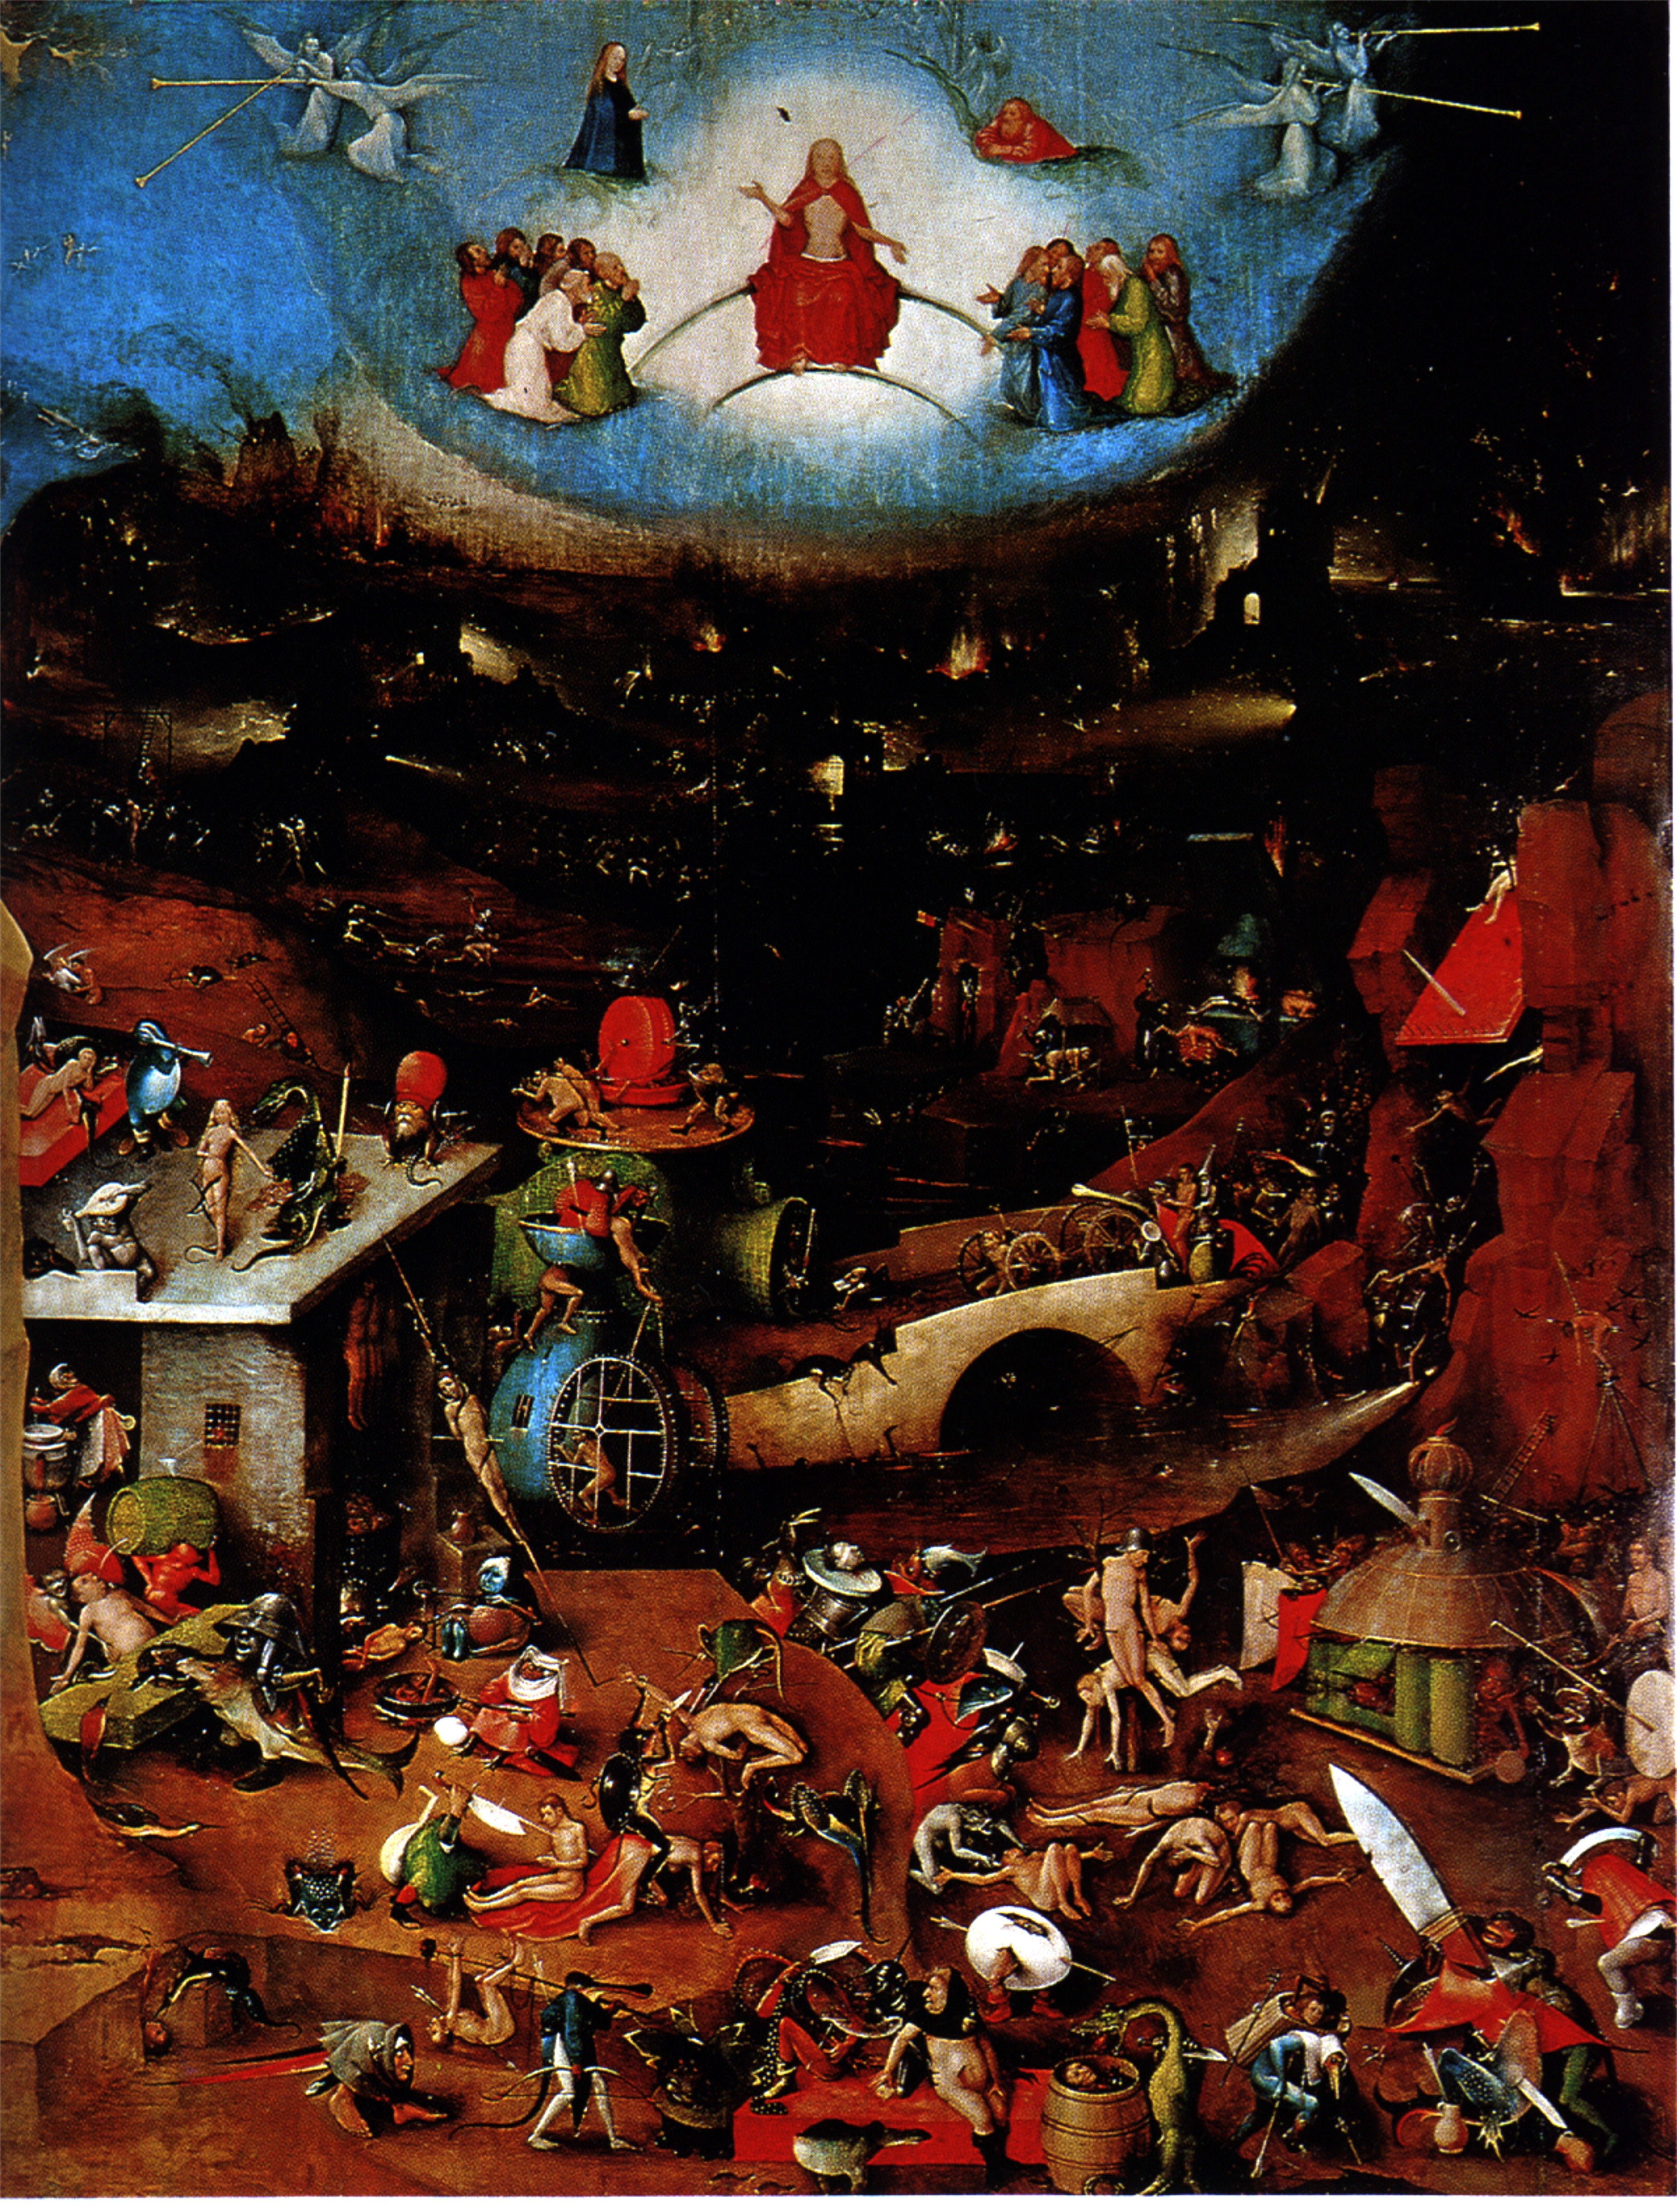 Hieronymus Bosch: Quem Foi O Artista, Obras E Características